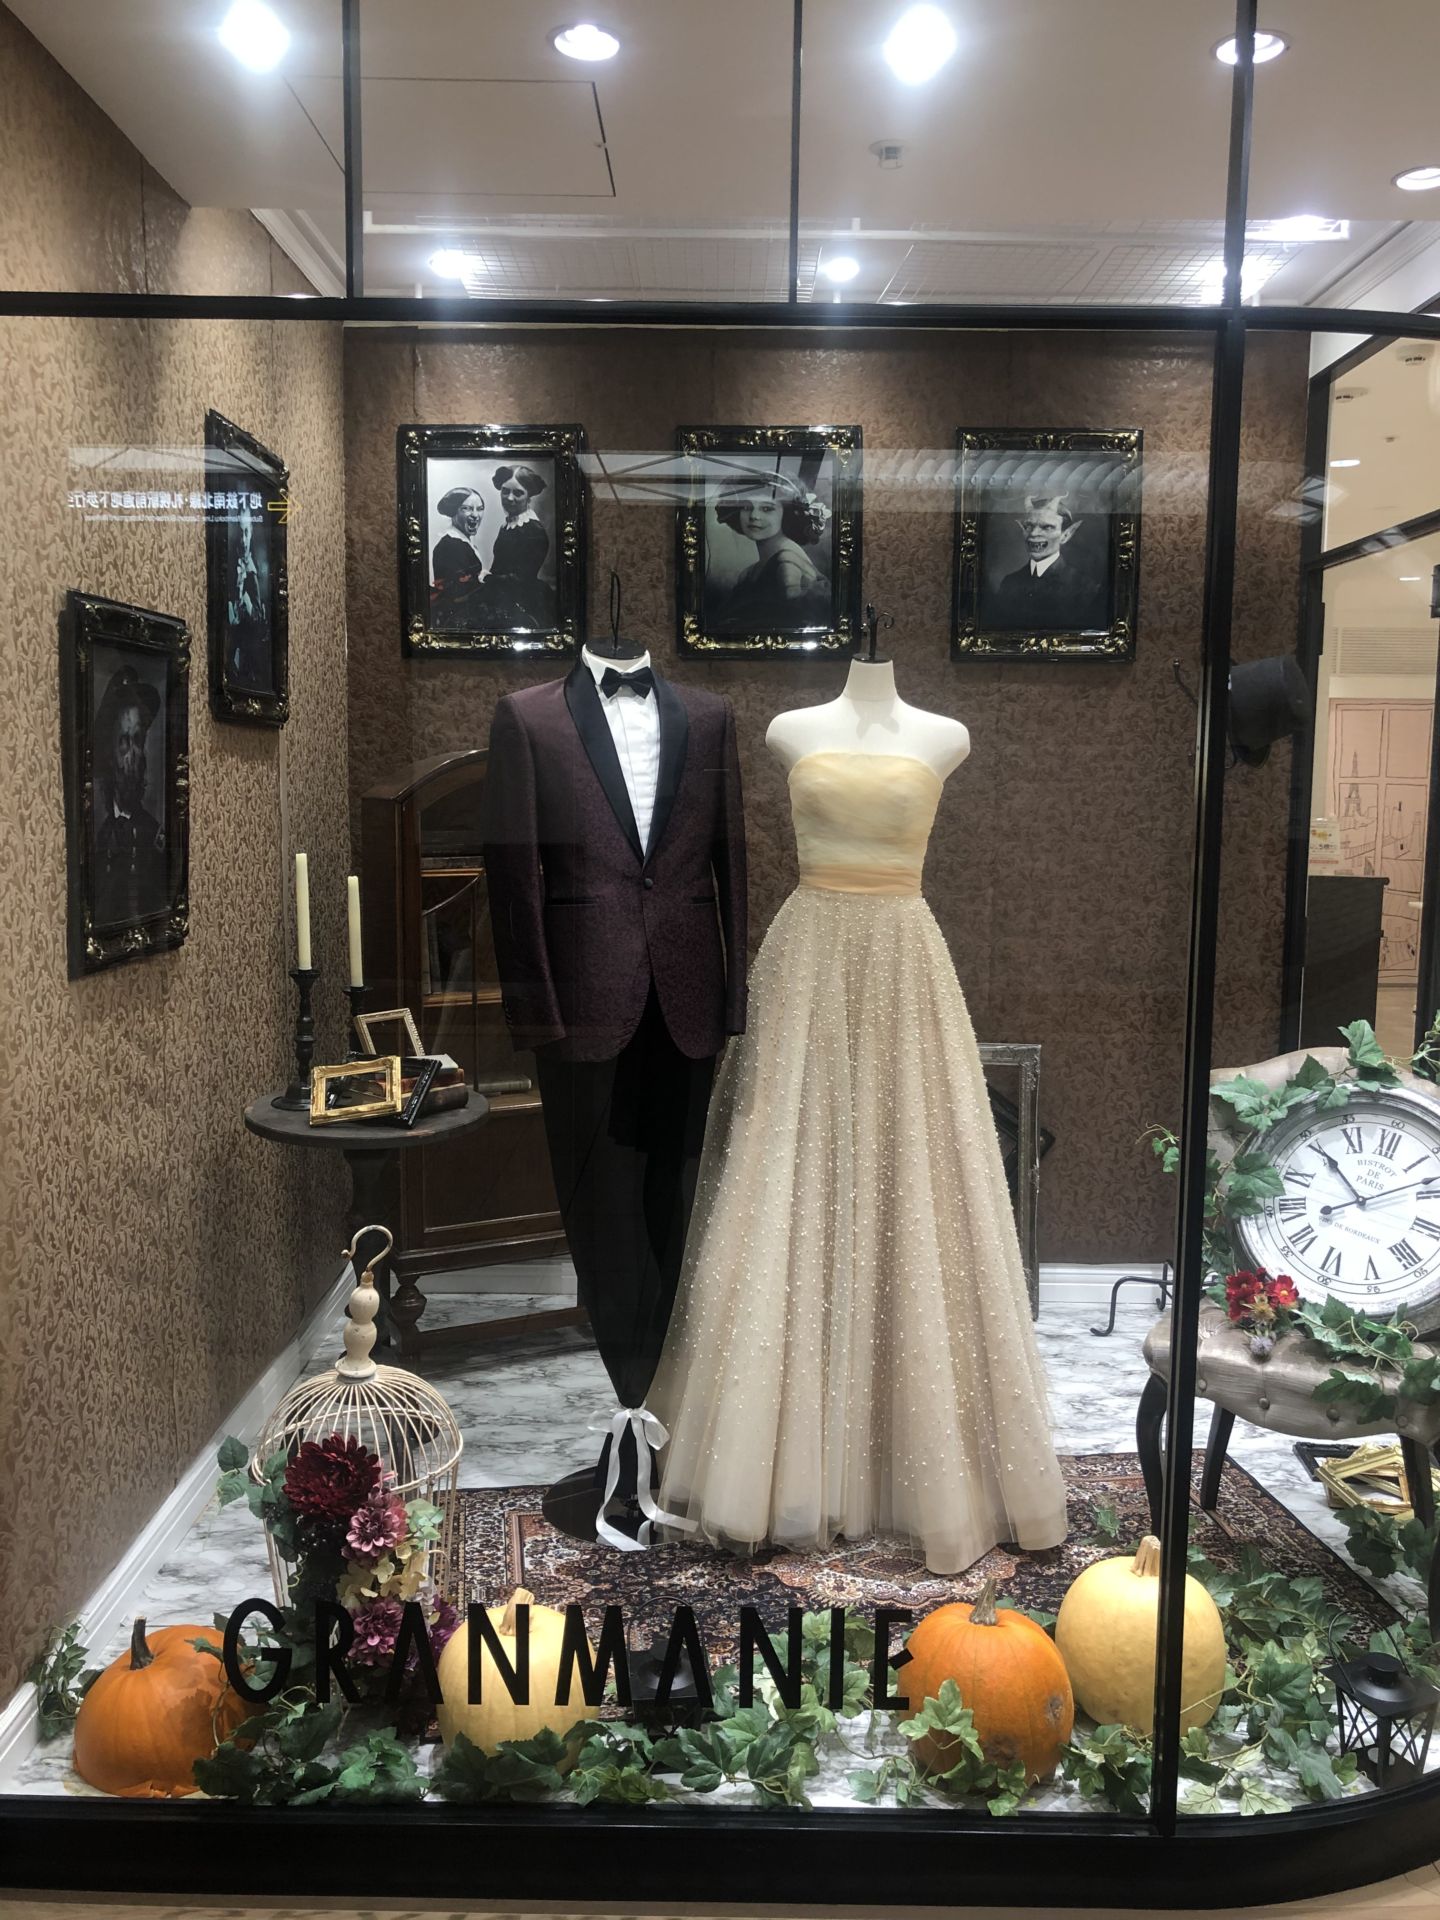 JULIA Gold | RUBIN SINGER | granmanie | wedding dress | display